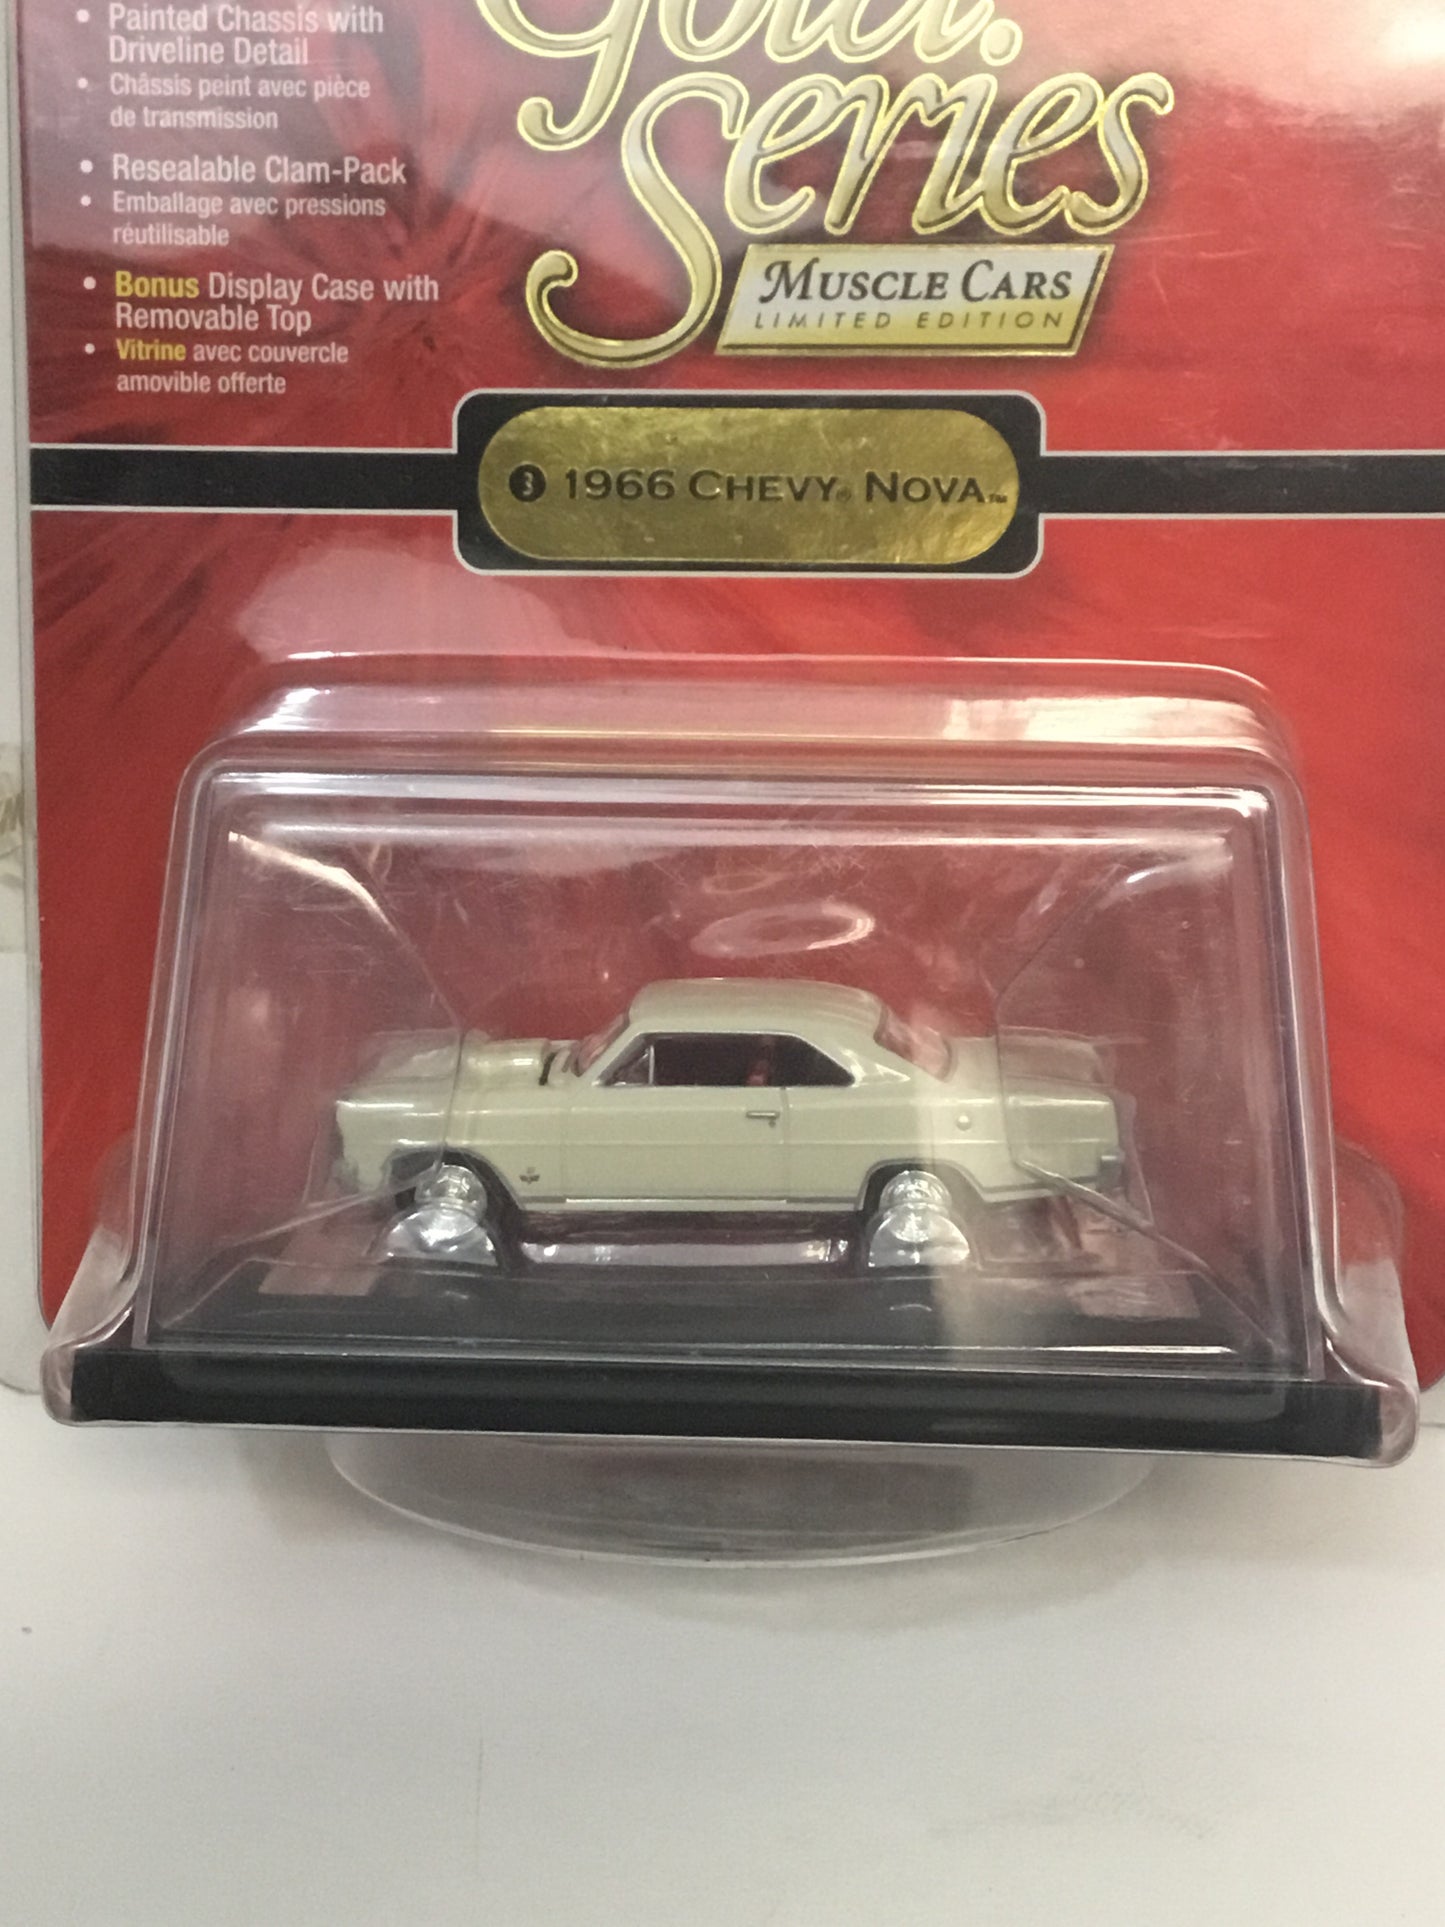 Johnny Lightning Gold series muscle cars 1966 Chevy nova  (6B5)